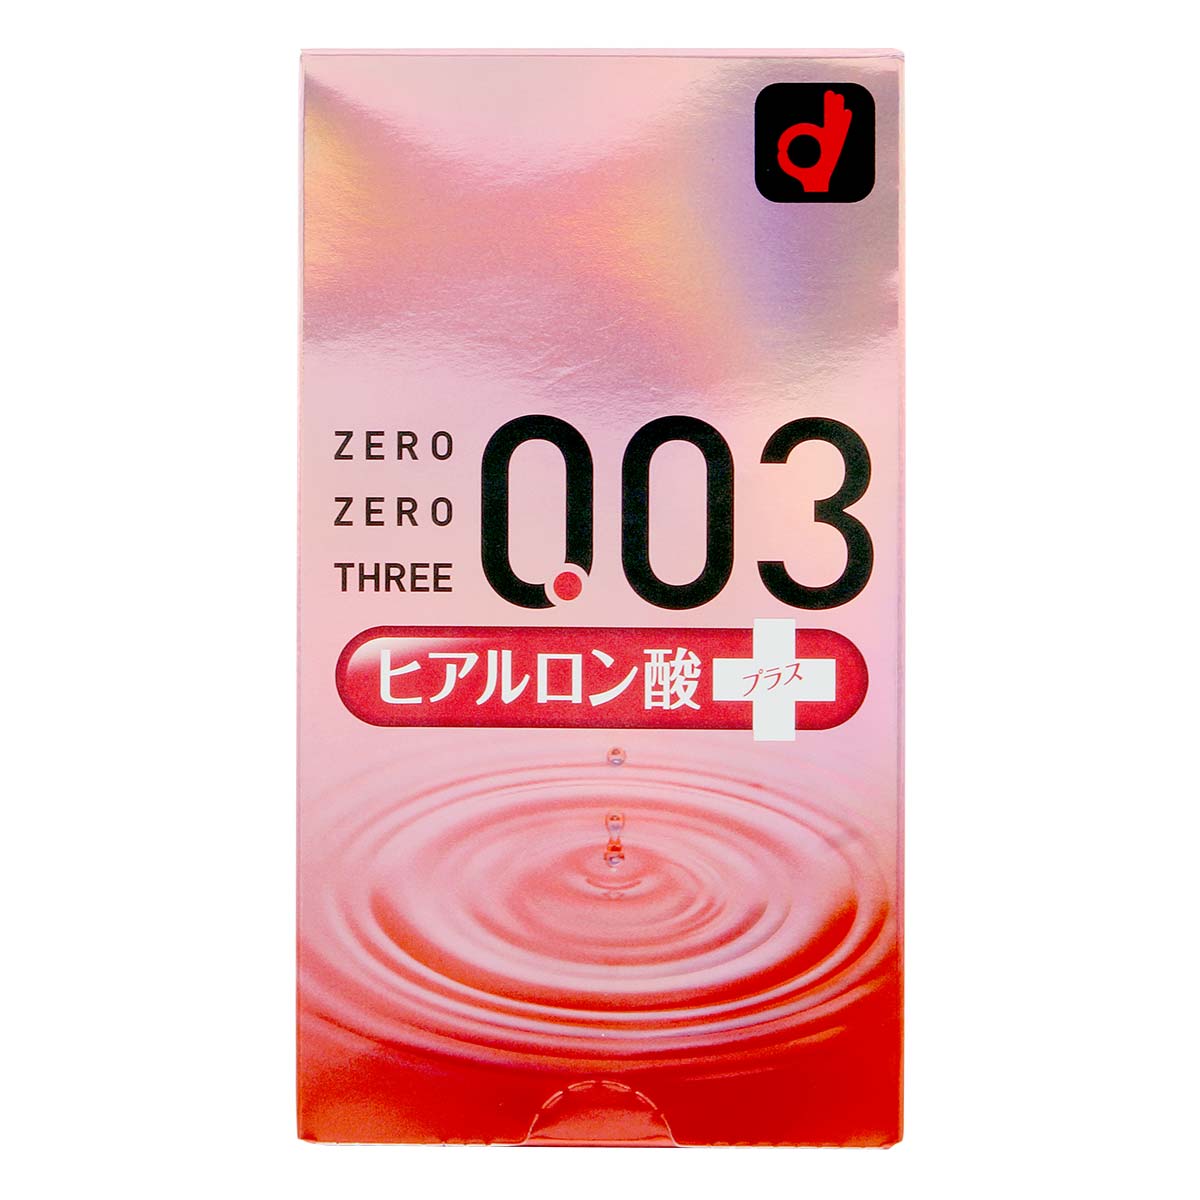 Zero Zero Three 0.03 Hyaluronic acid (Japan Edition) 10's Pack Latex Condom-p_2